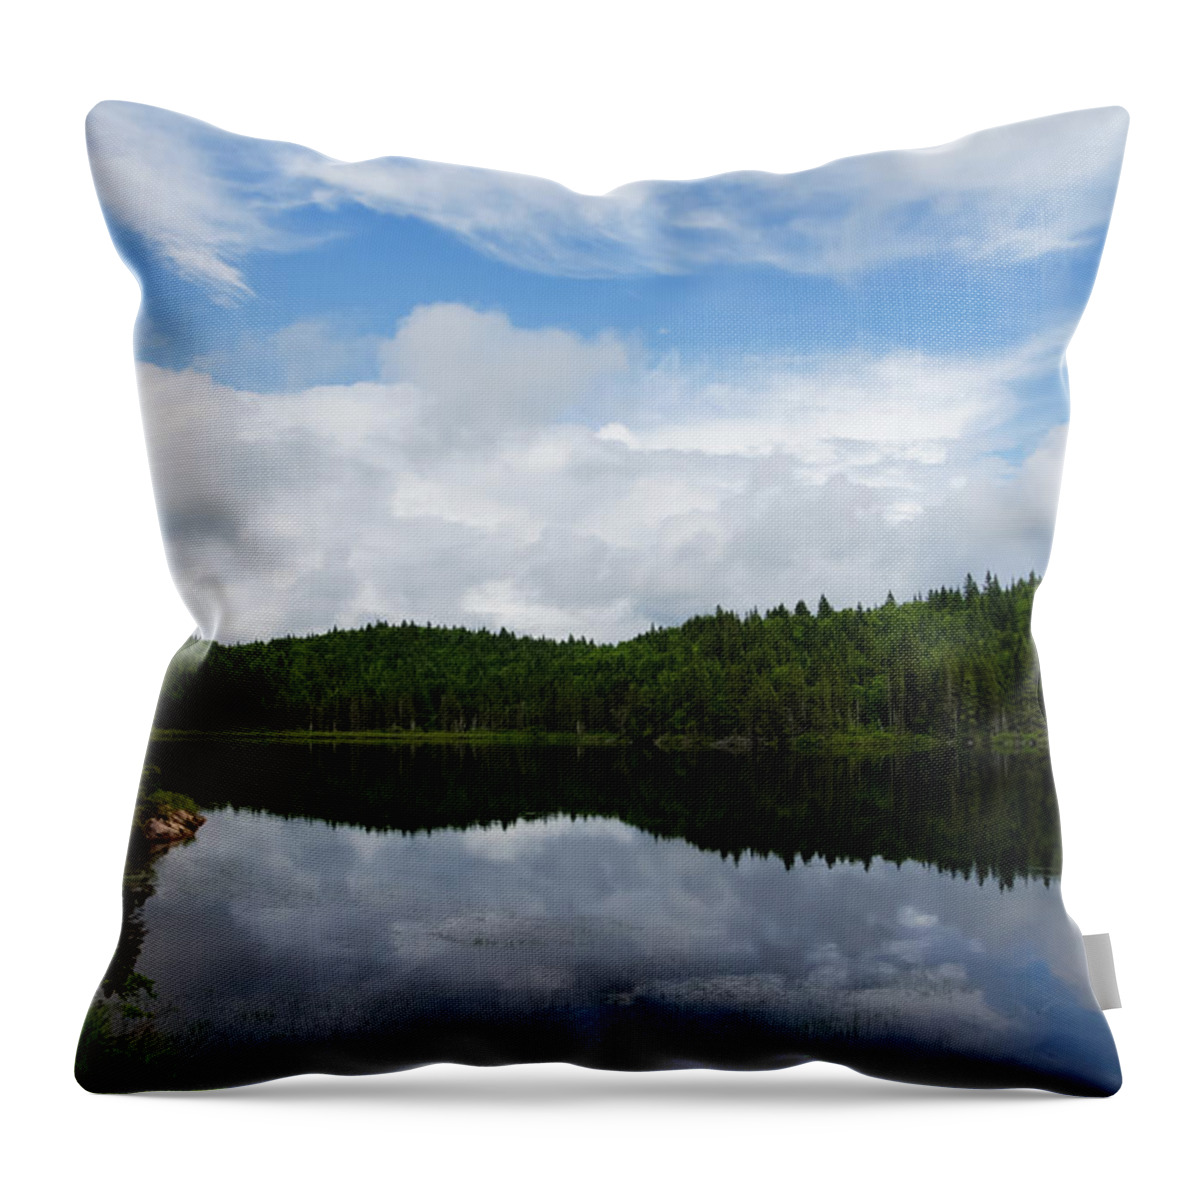 Calm Lake Throw Pillow featuring the photograph Calm Lake - Turbulent Sky by Georgia Mizuleva